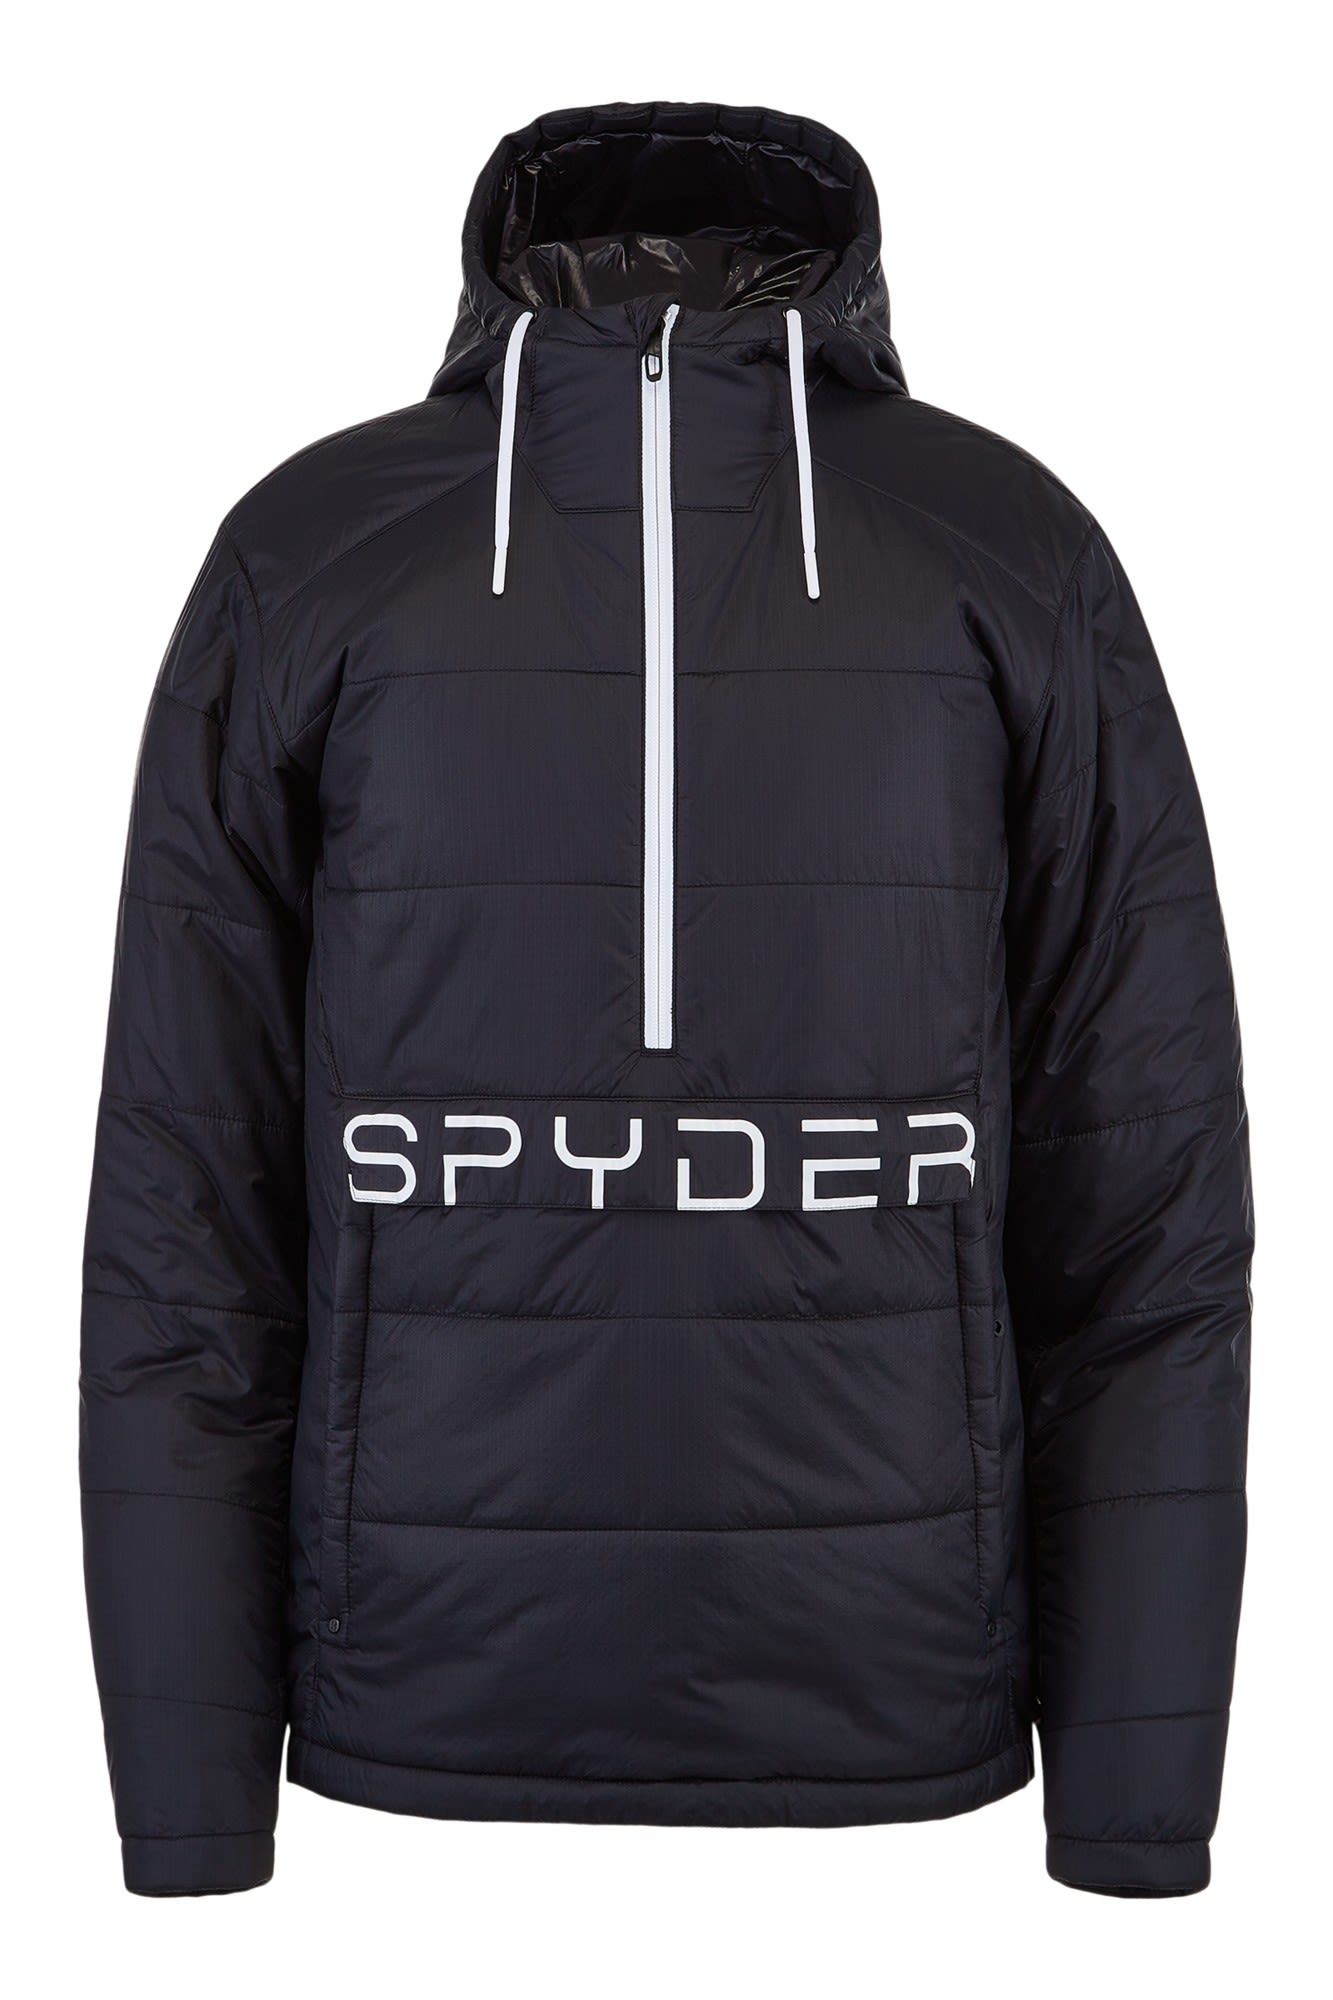 Spyder Glissade Anorak Jacket Schwarz- Male Daunen Anoraks- Grsse S - Farbe Black